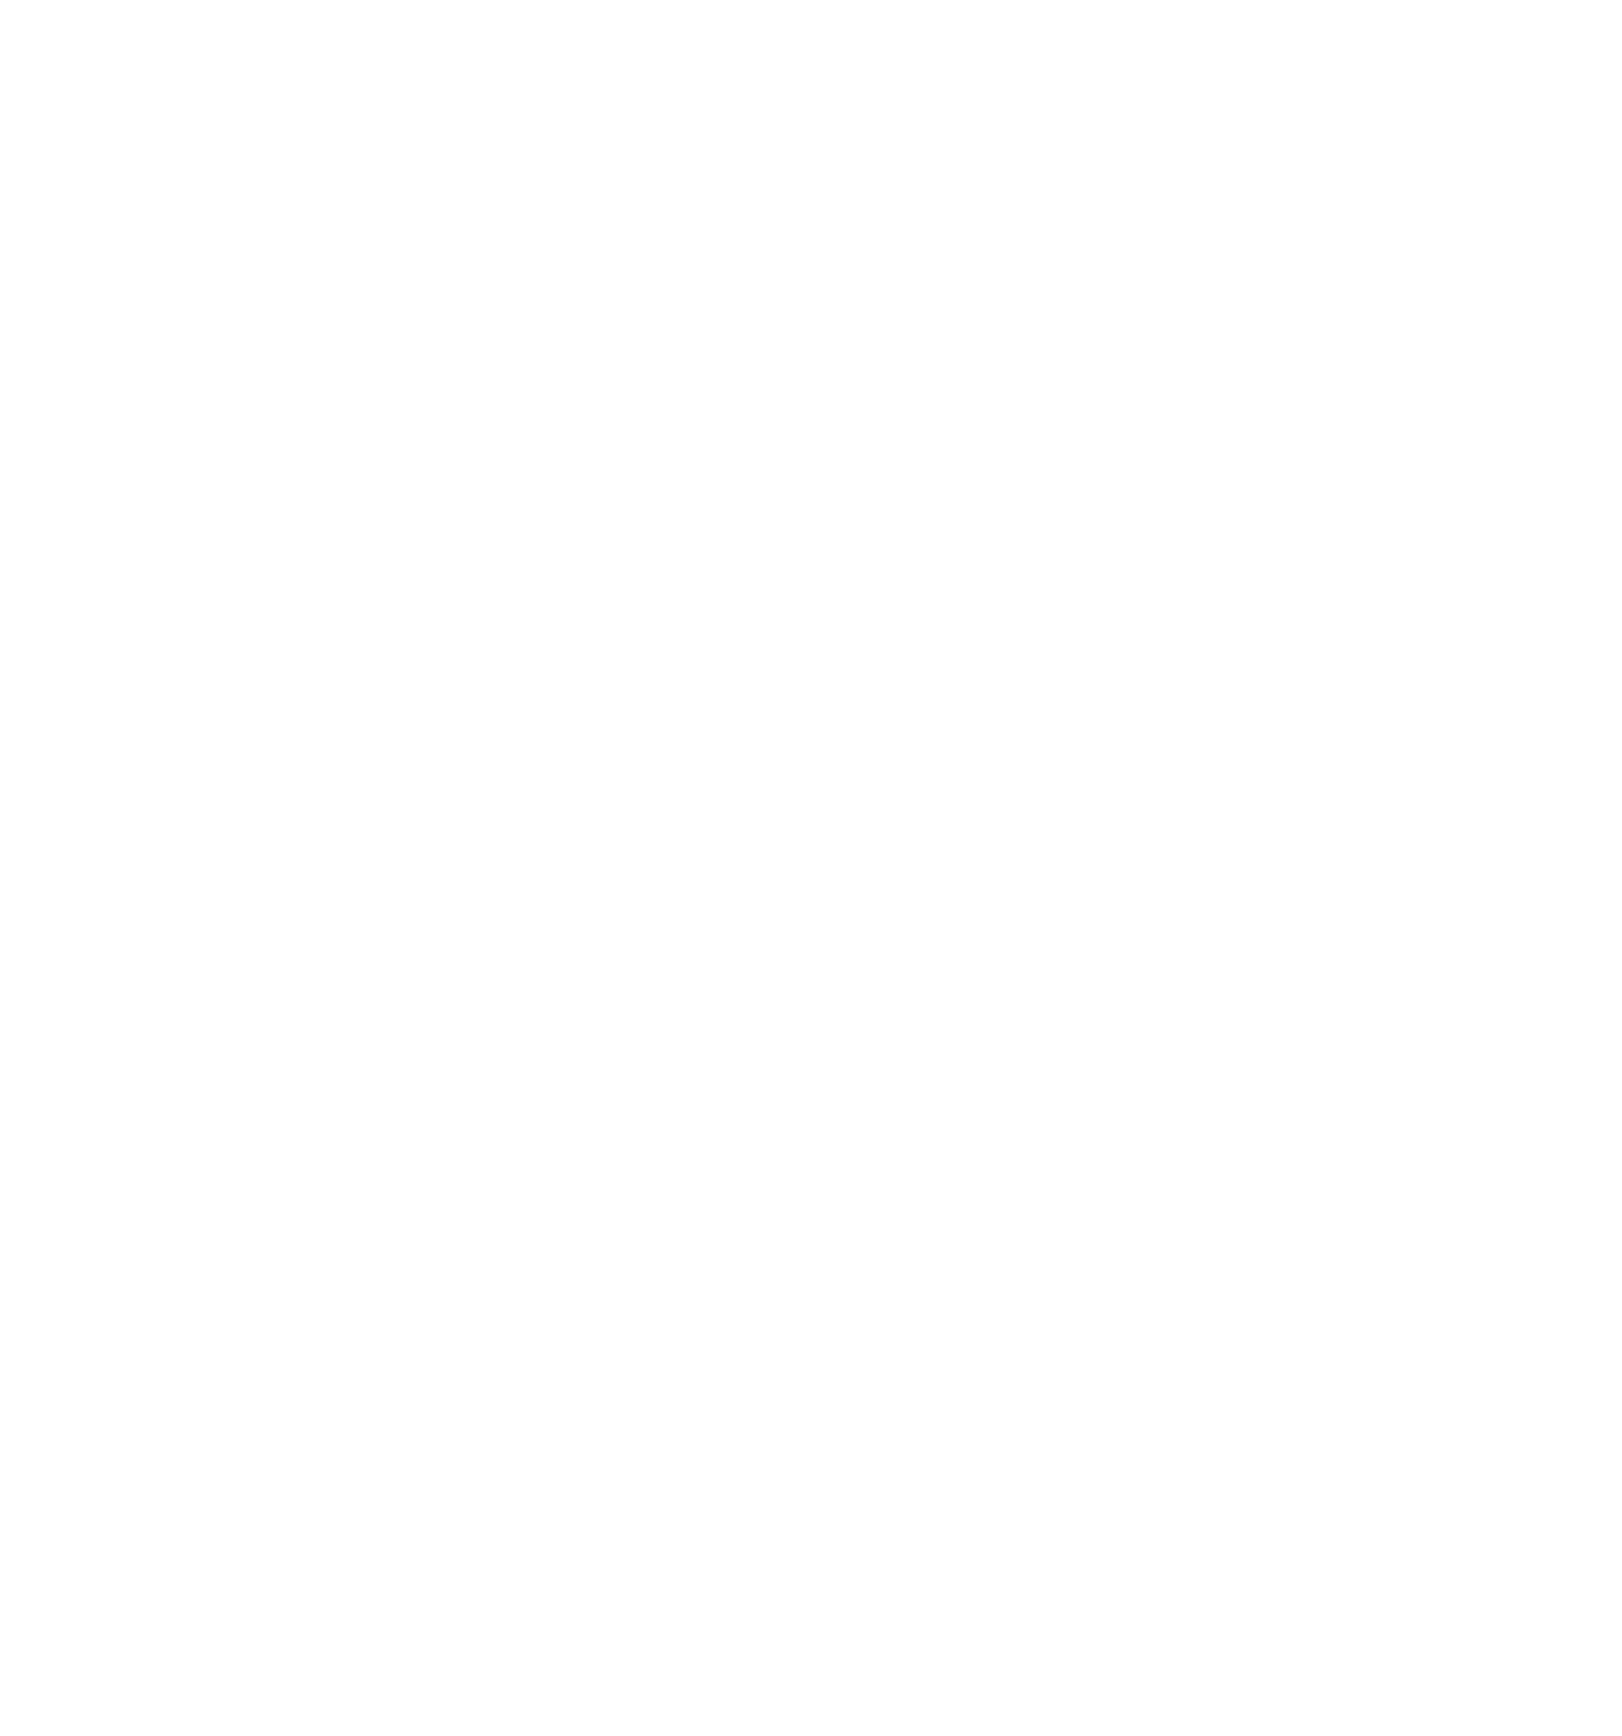 Vibrant Church